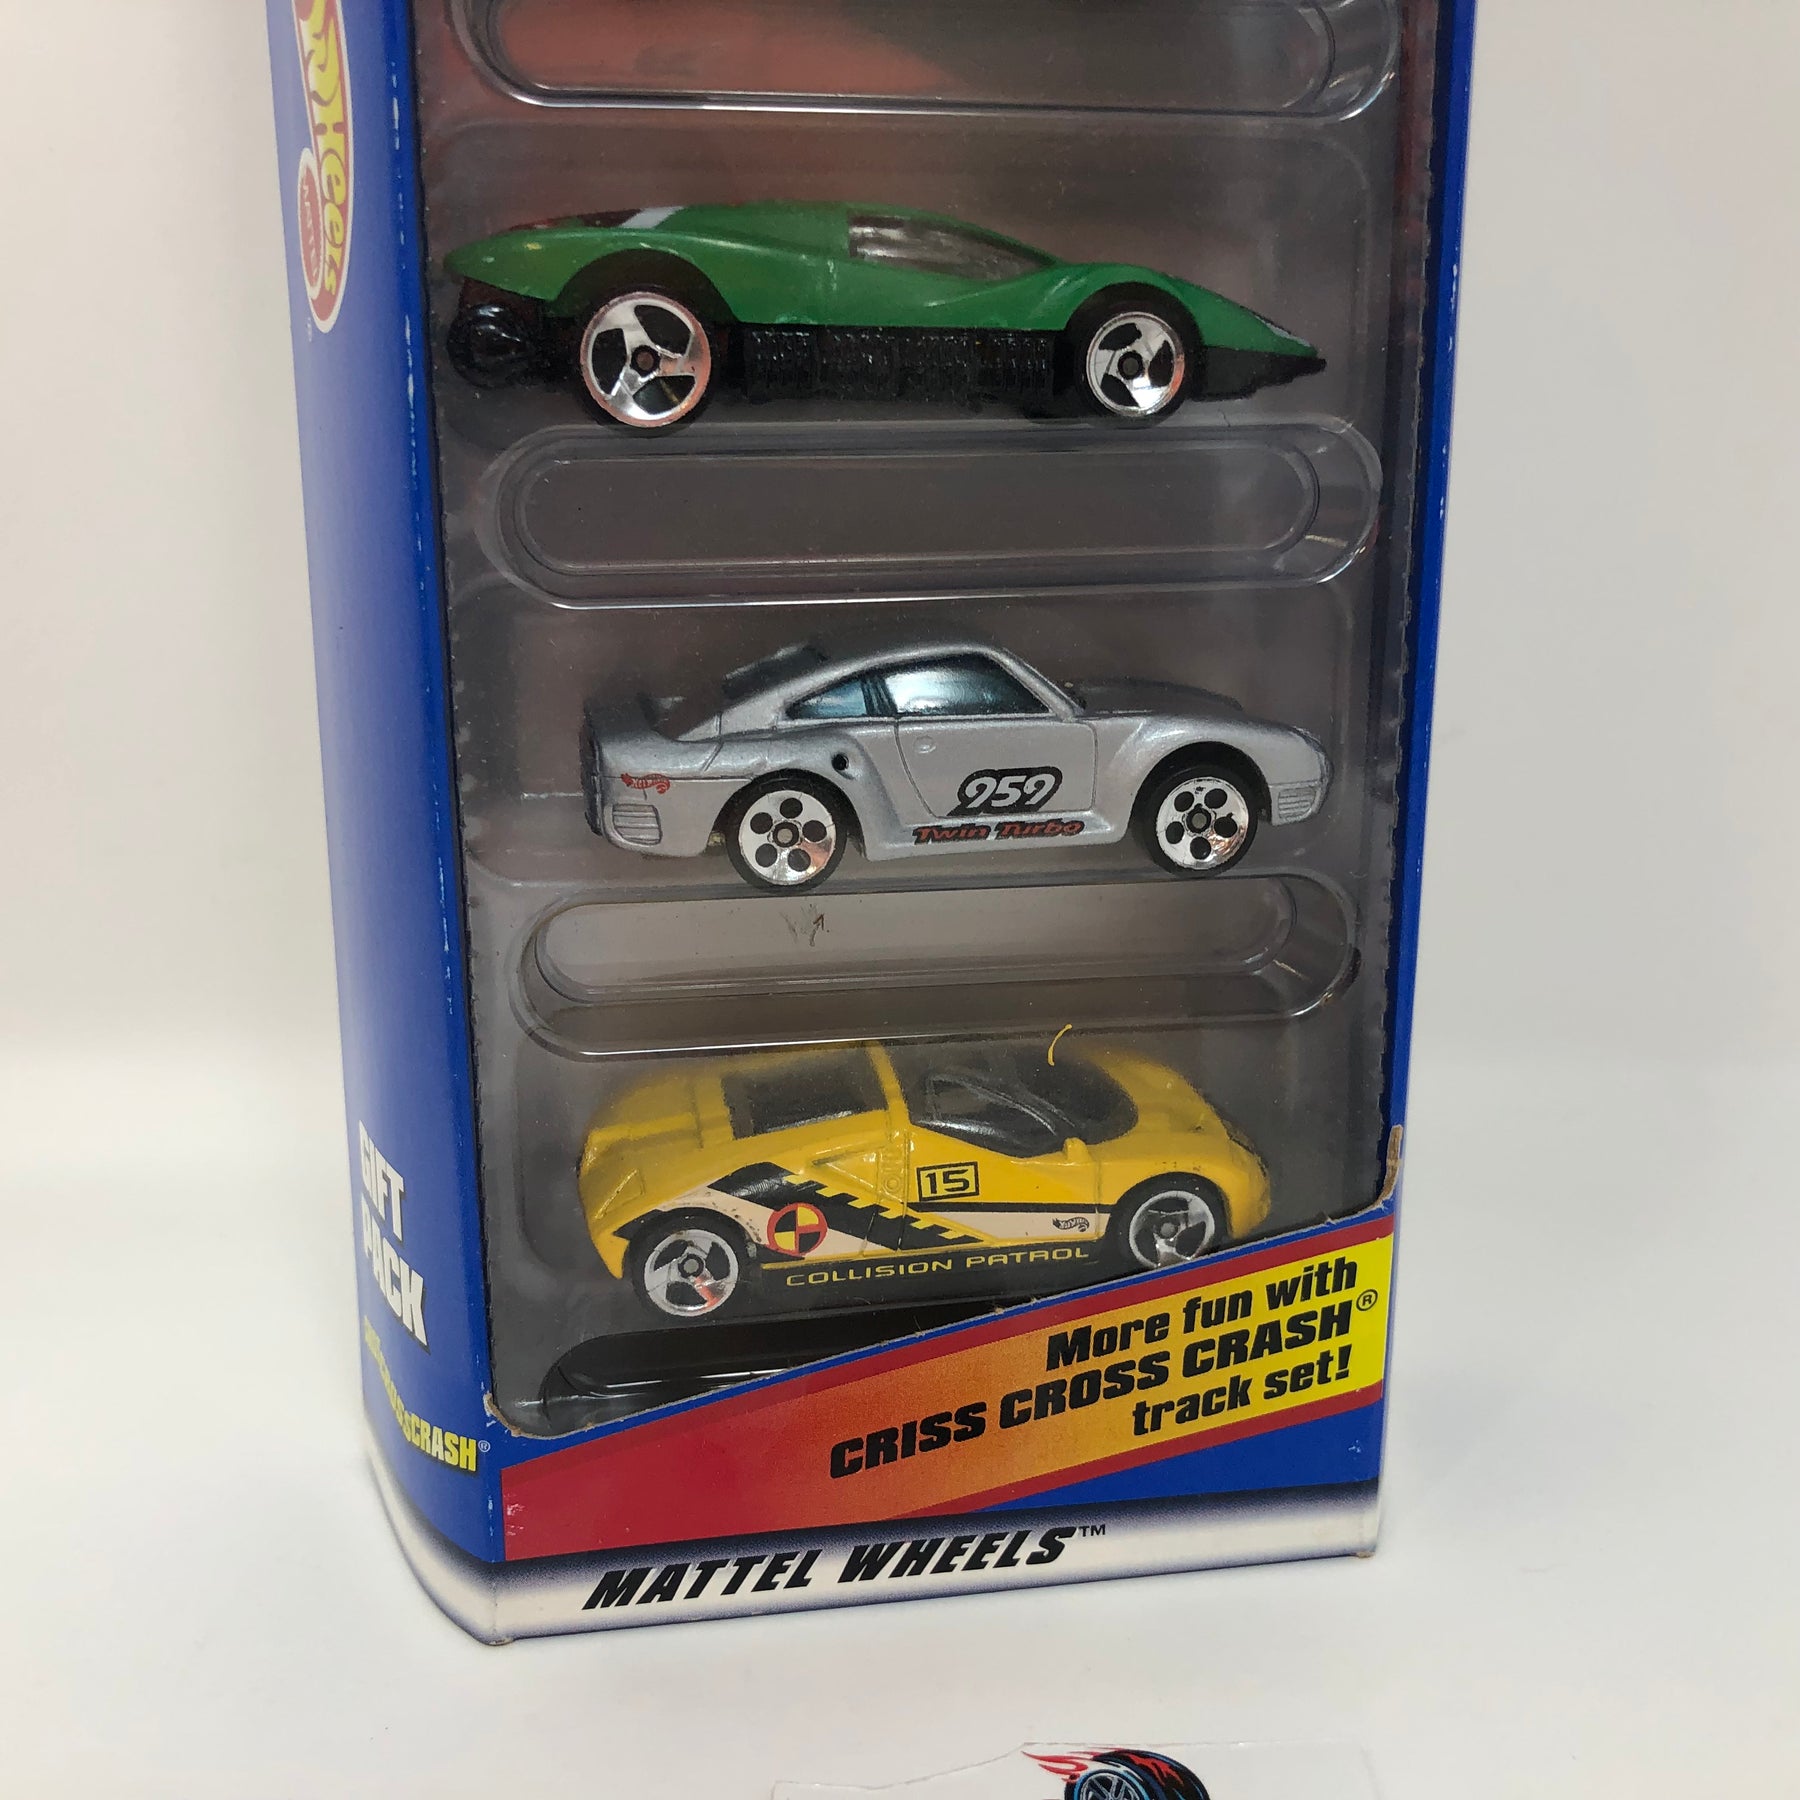 Hot Wheels Criss Cross Crash R0960 set of 5 cars - toys & games - by owner  - sale - craigslist